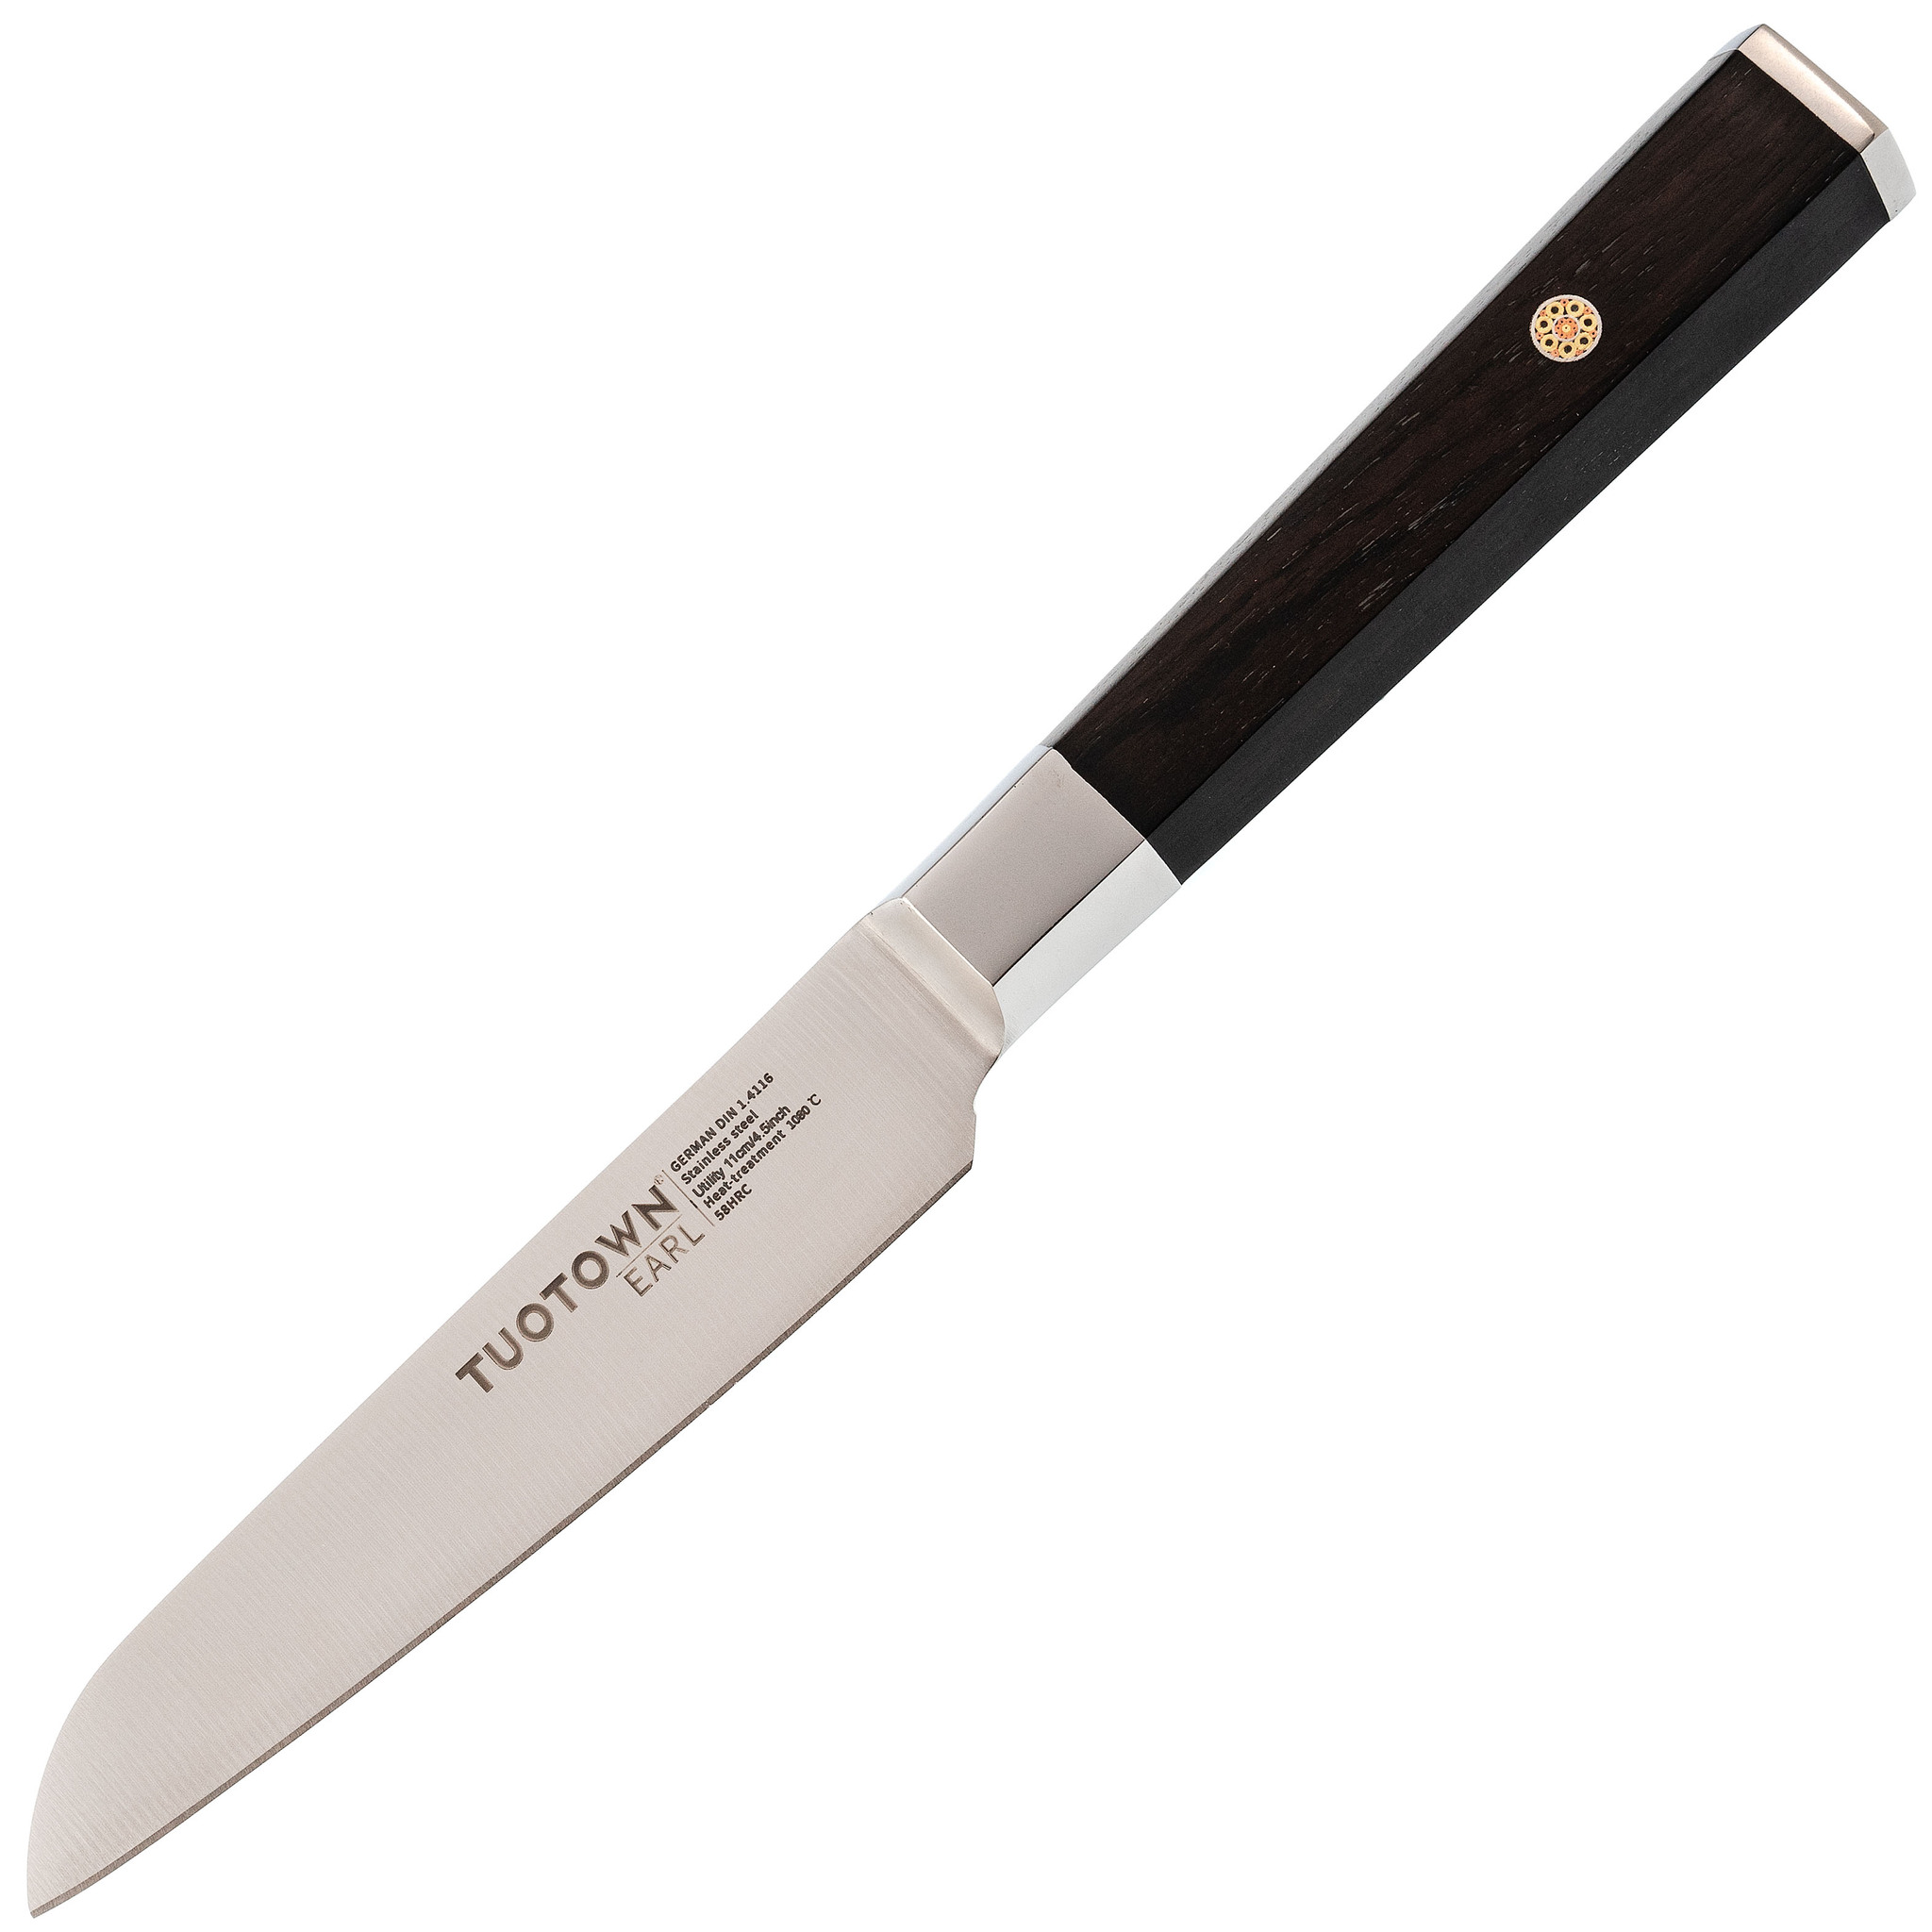 Кухонный нож универсальный, Tuotown серия Earl, сталь 1.4116 кухонный секатор универсальный х60